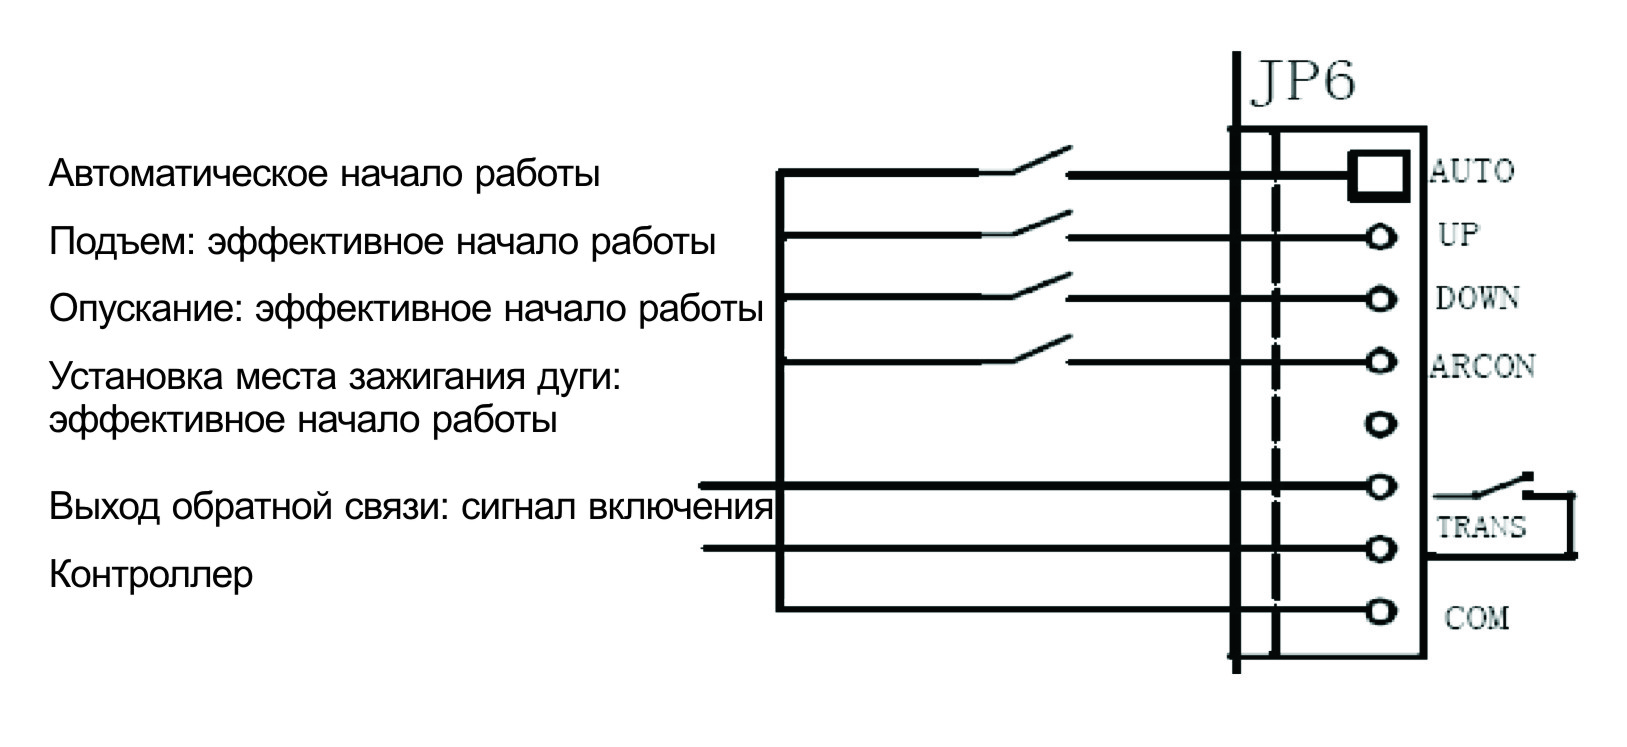 Схема интерфейса ЧПУ